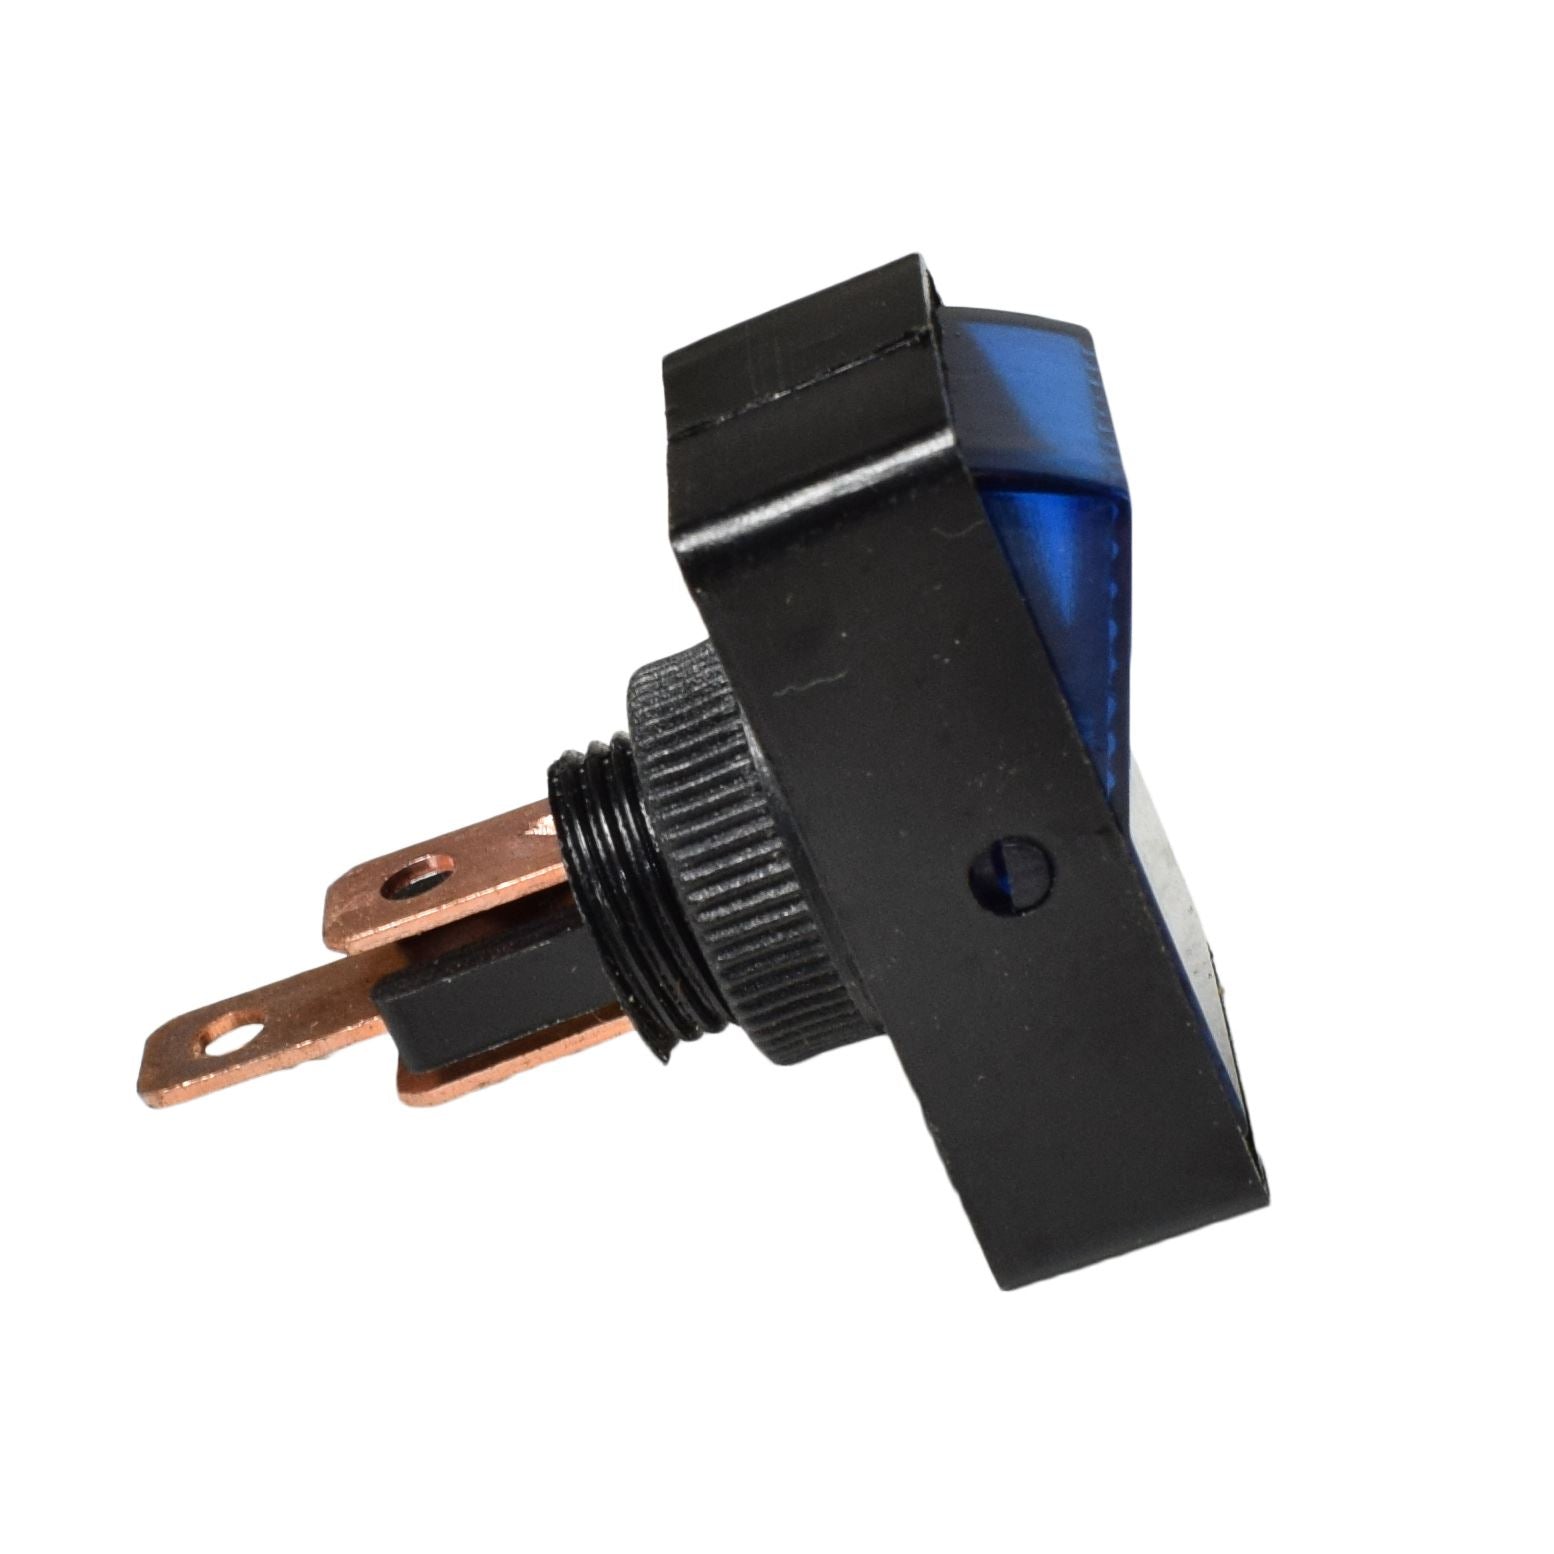 Blue Rocker Switch Illuminated ABS Plastic 12V 16 Amp On / Off Car Dashboard